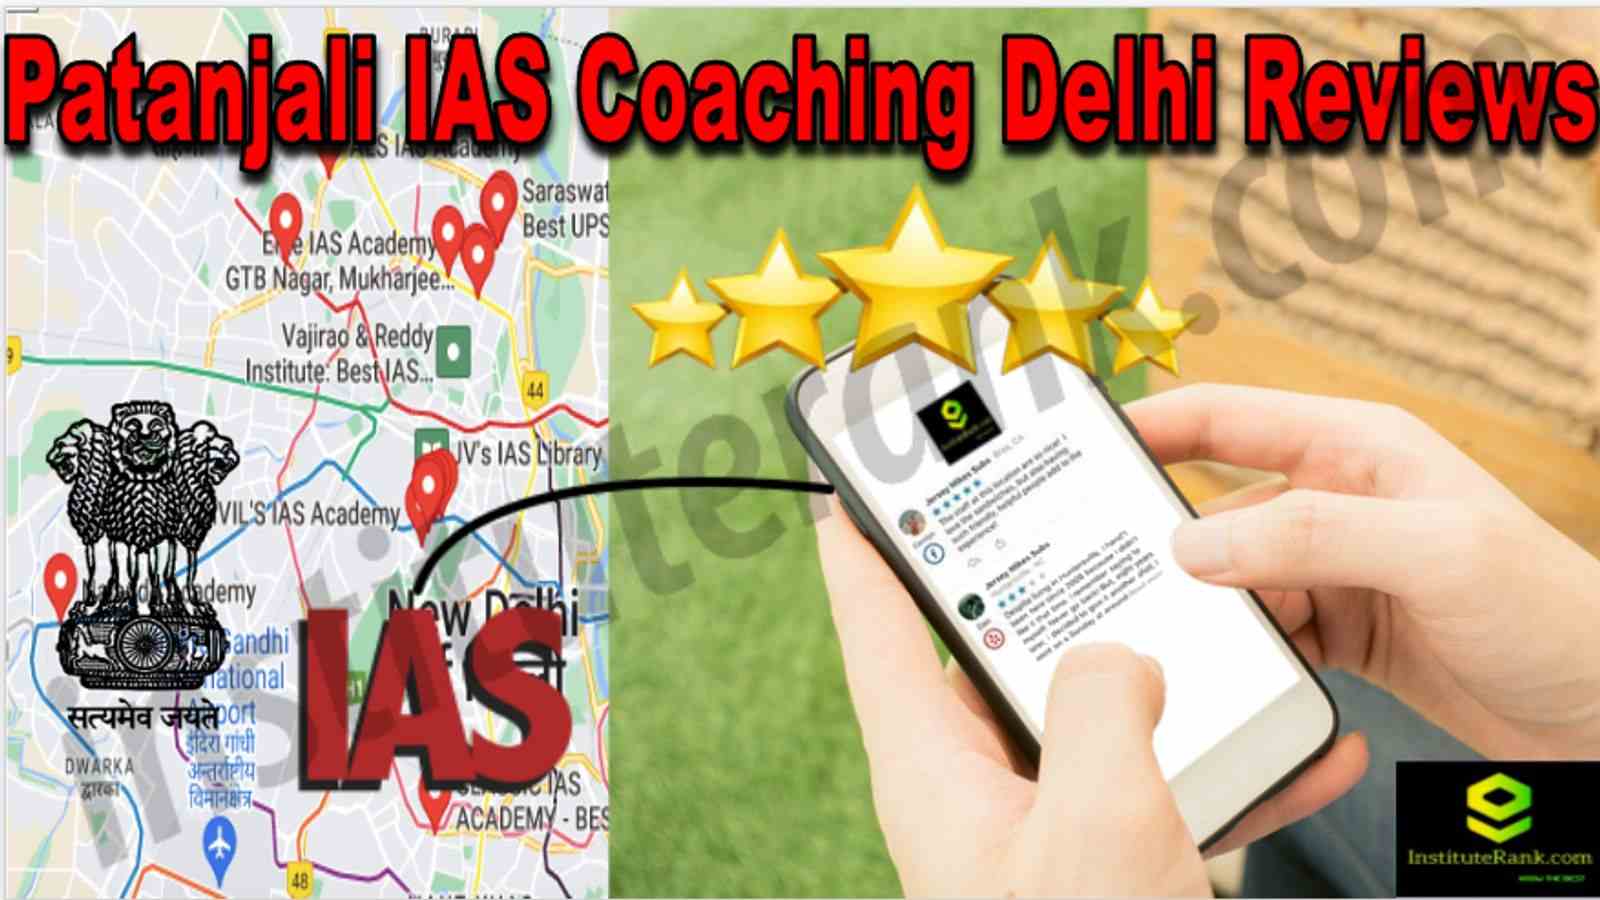 Patanjali IAS Coaching Delhi Reviews